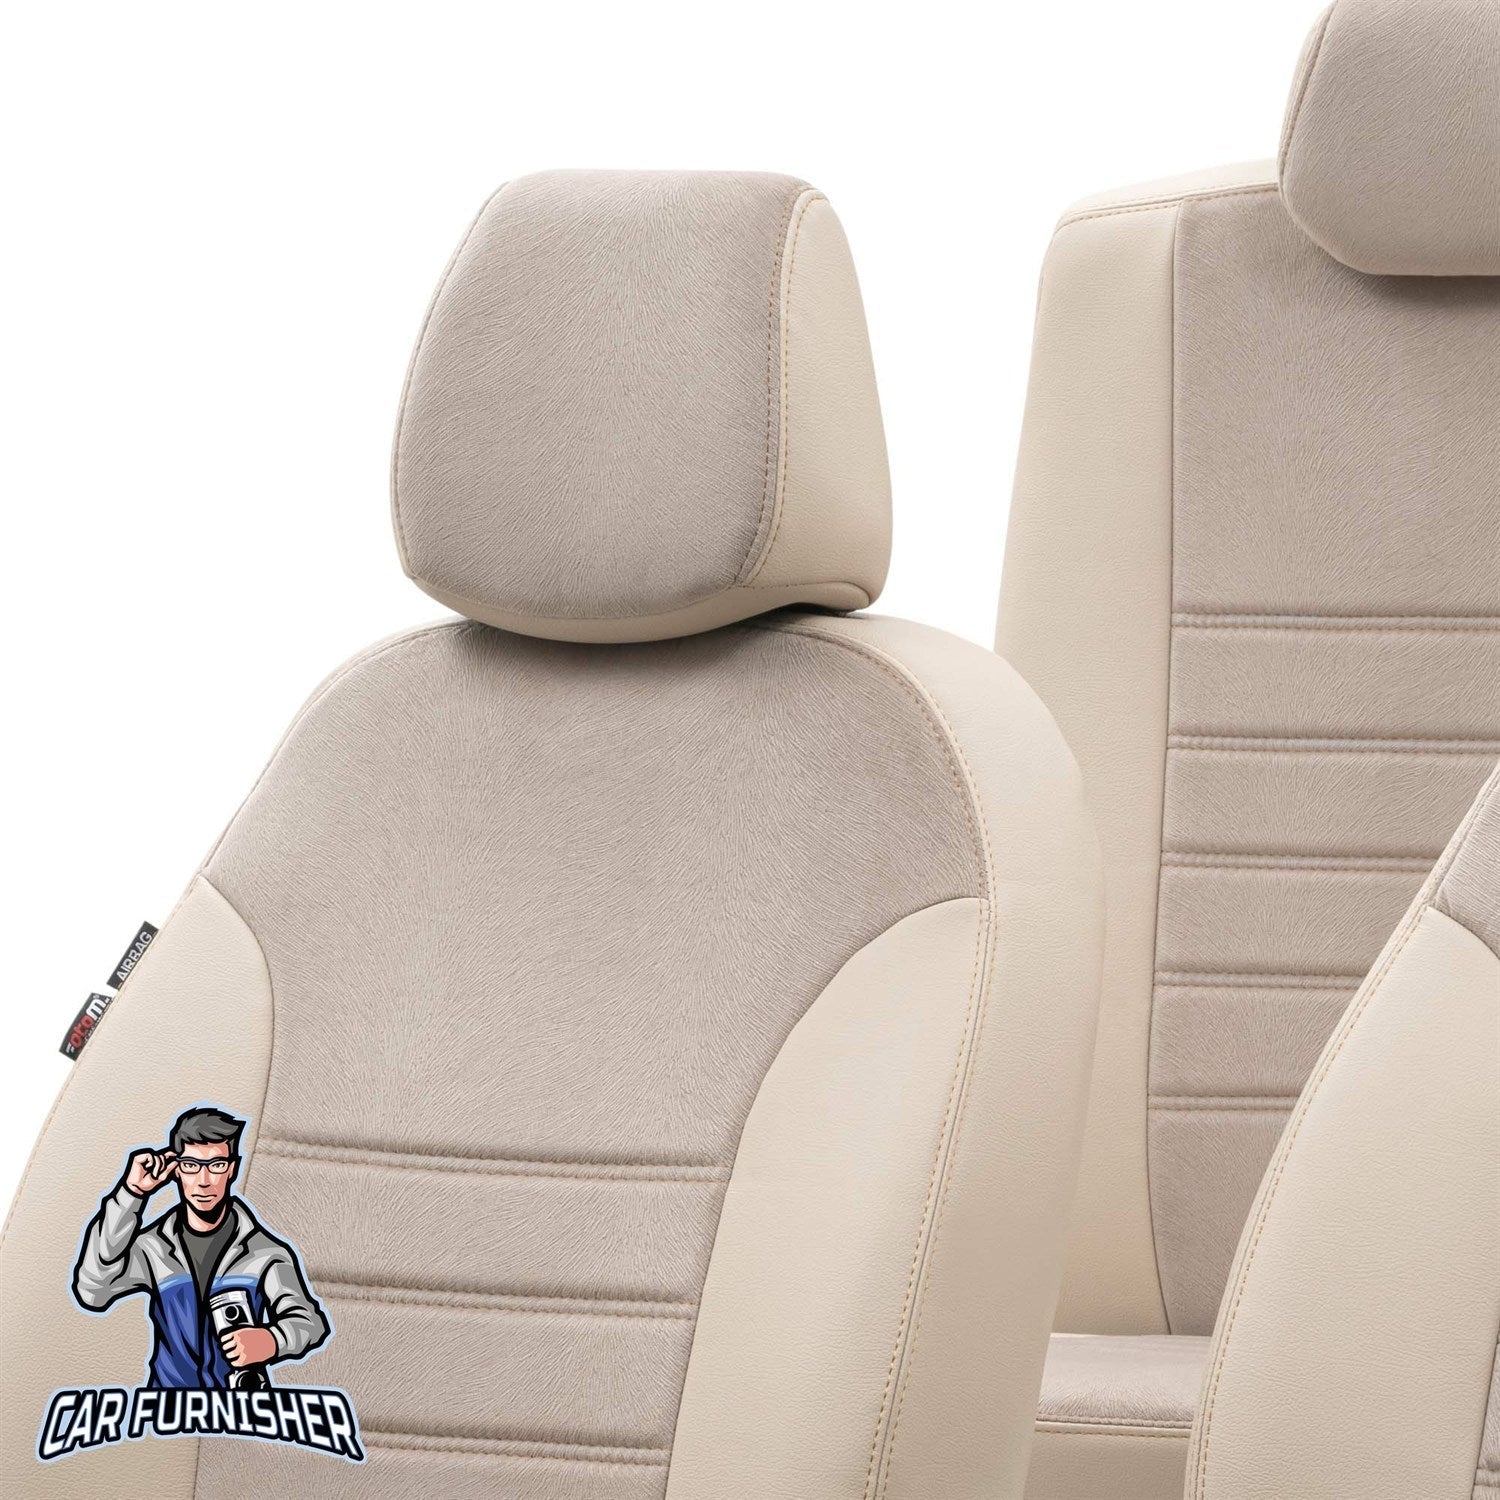 Daihatsu Materia Car Seat Covers 2007-2010 London Design Beige Full Set (5 Seats + Handrest) Leather & Fabric